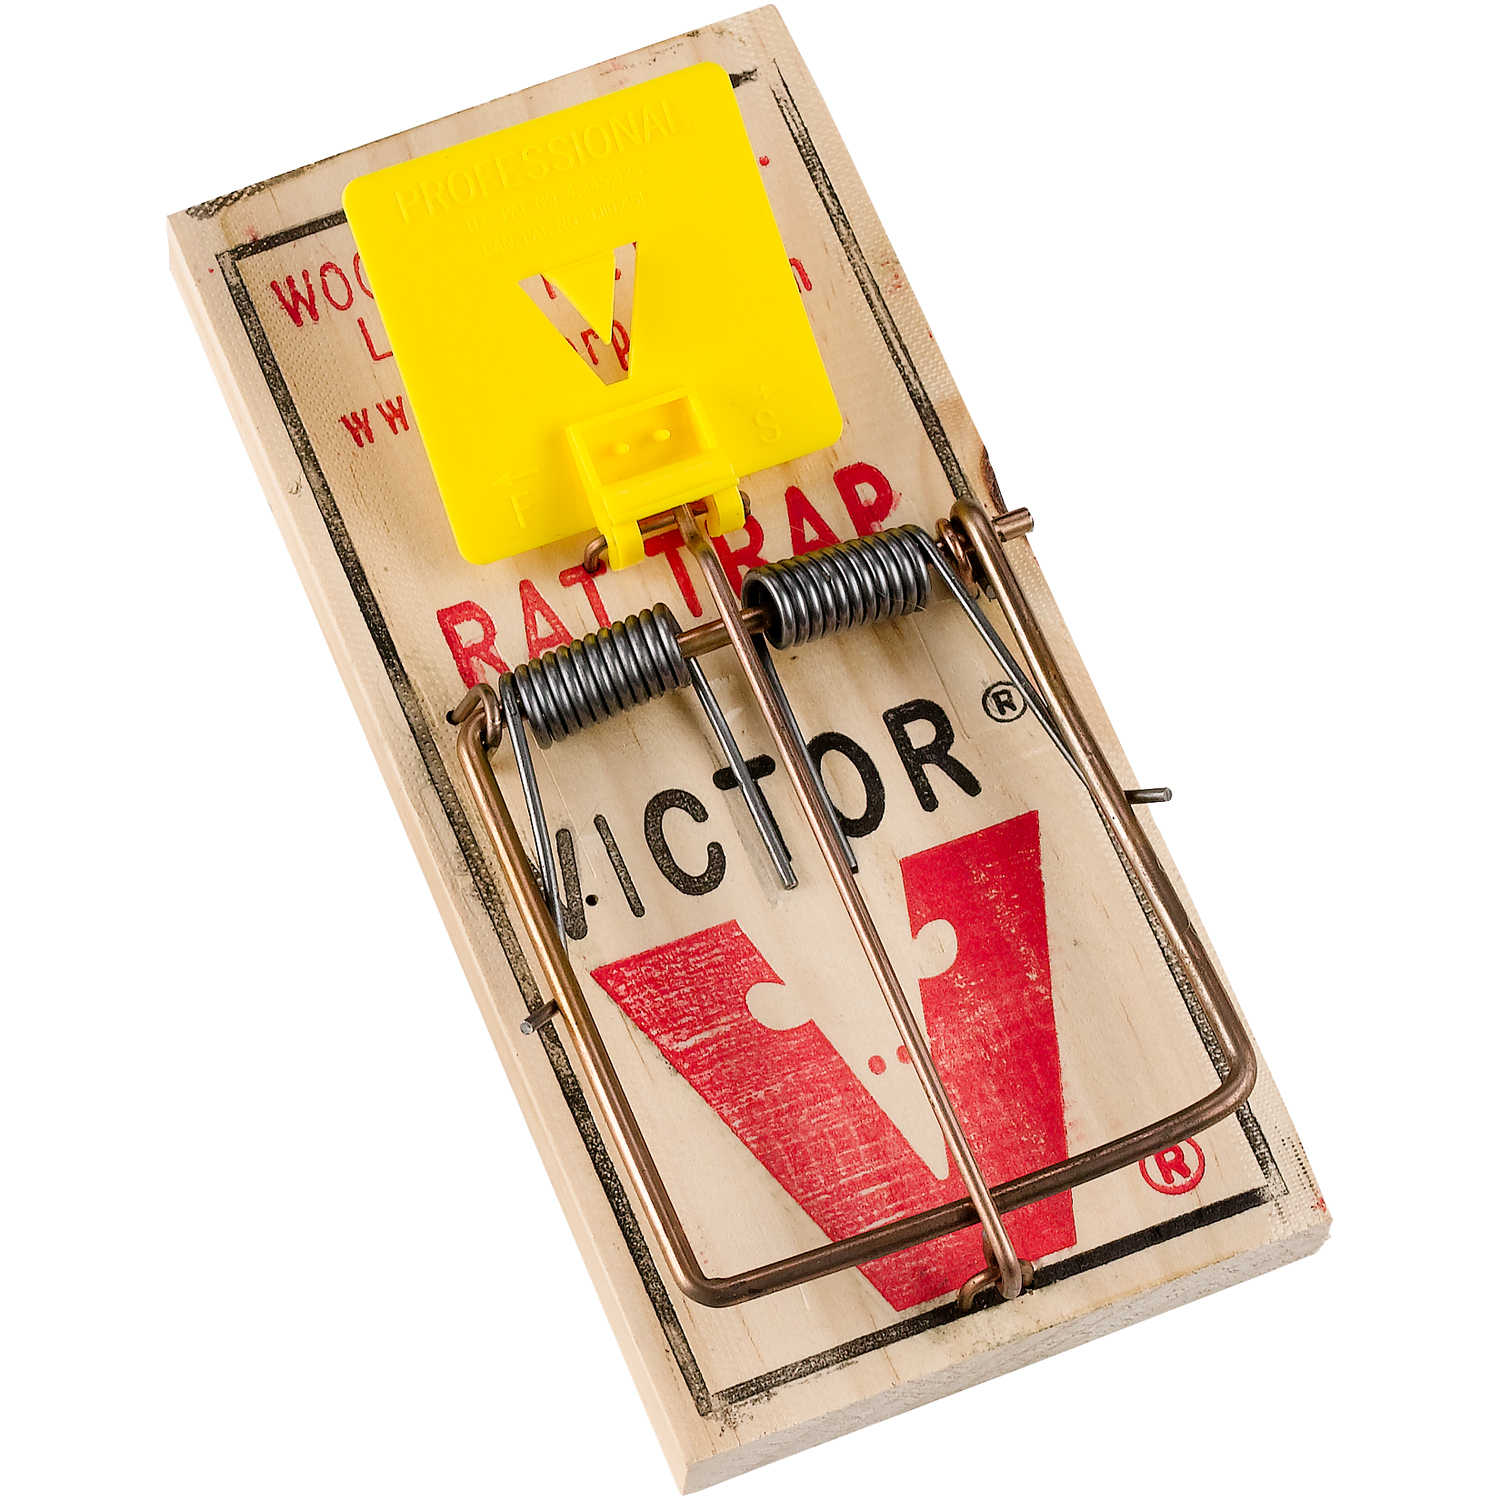 Victor Mouse Traps, Plastic Pedal, Pre-Baited - 4 traps